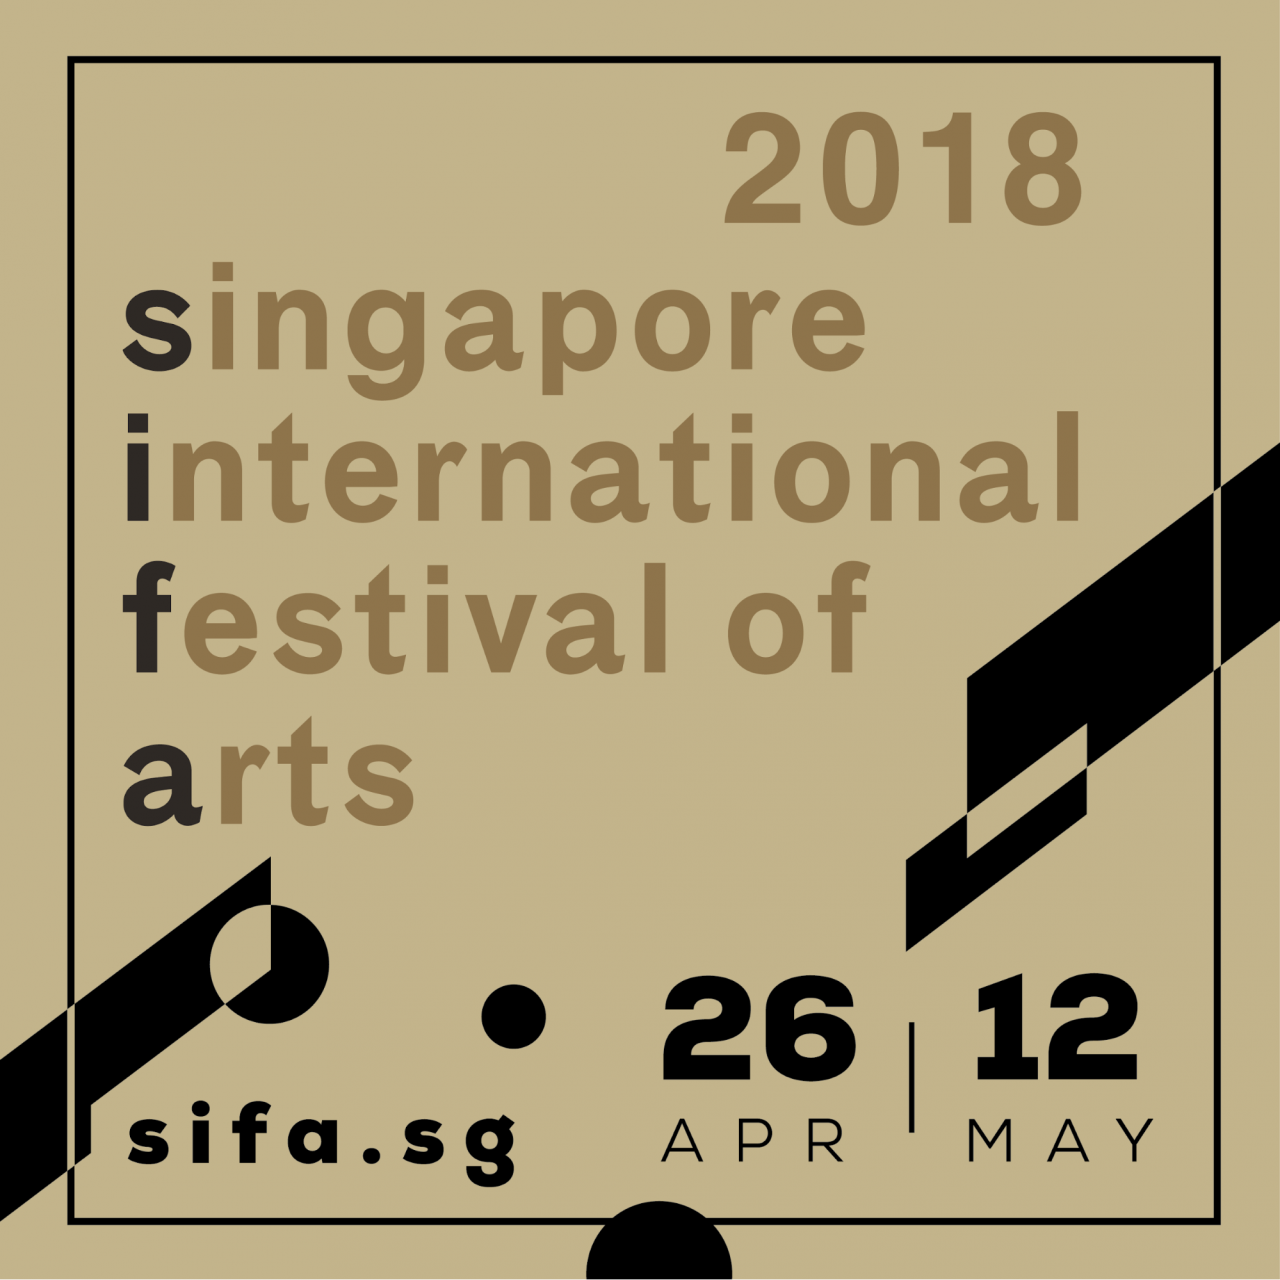 Singapore International Festival of Arts 2018 events